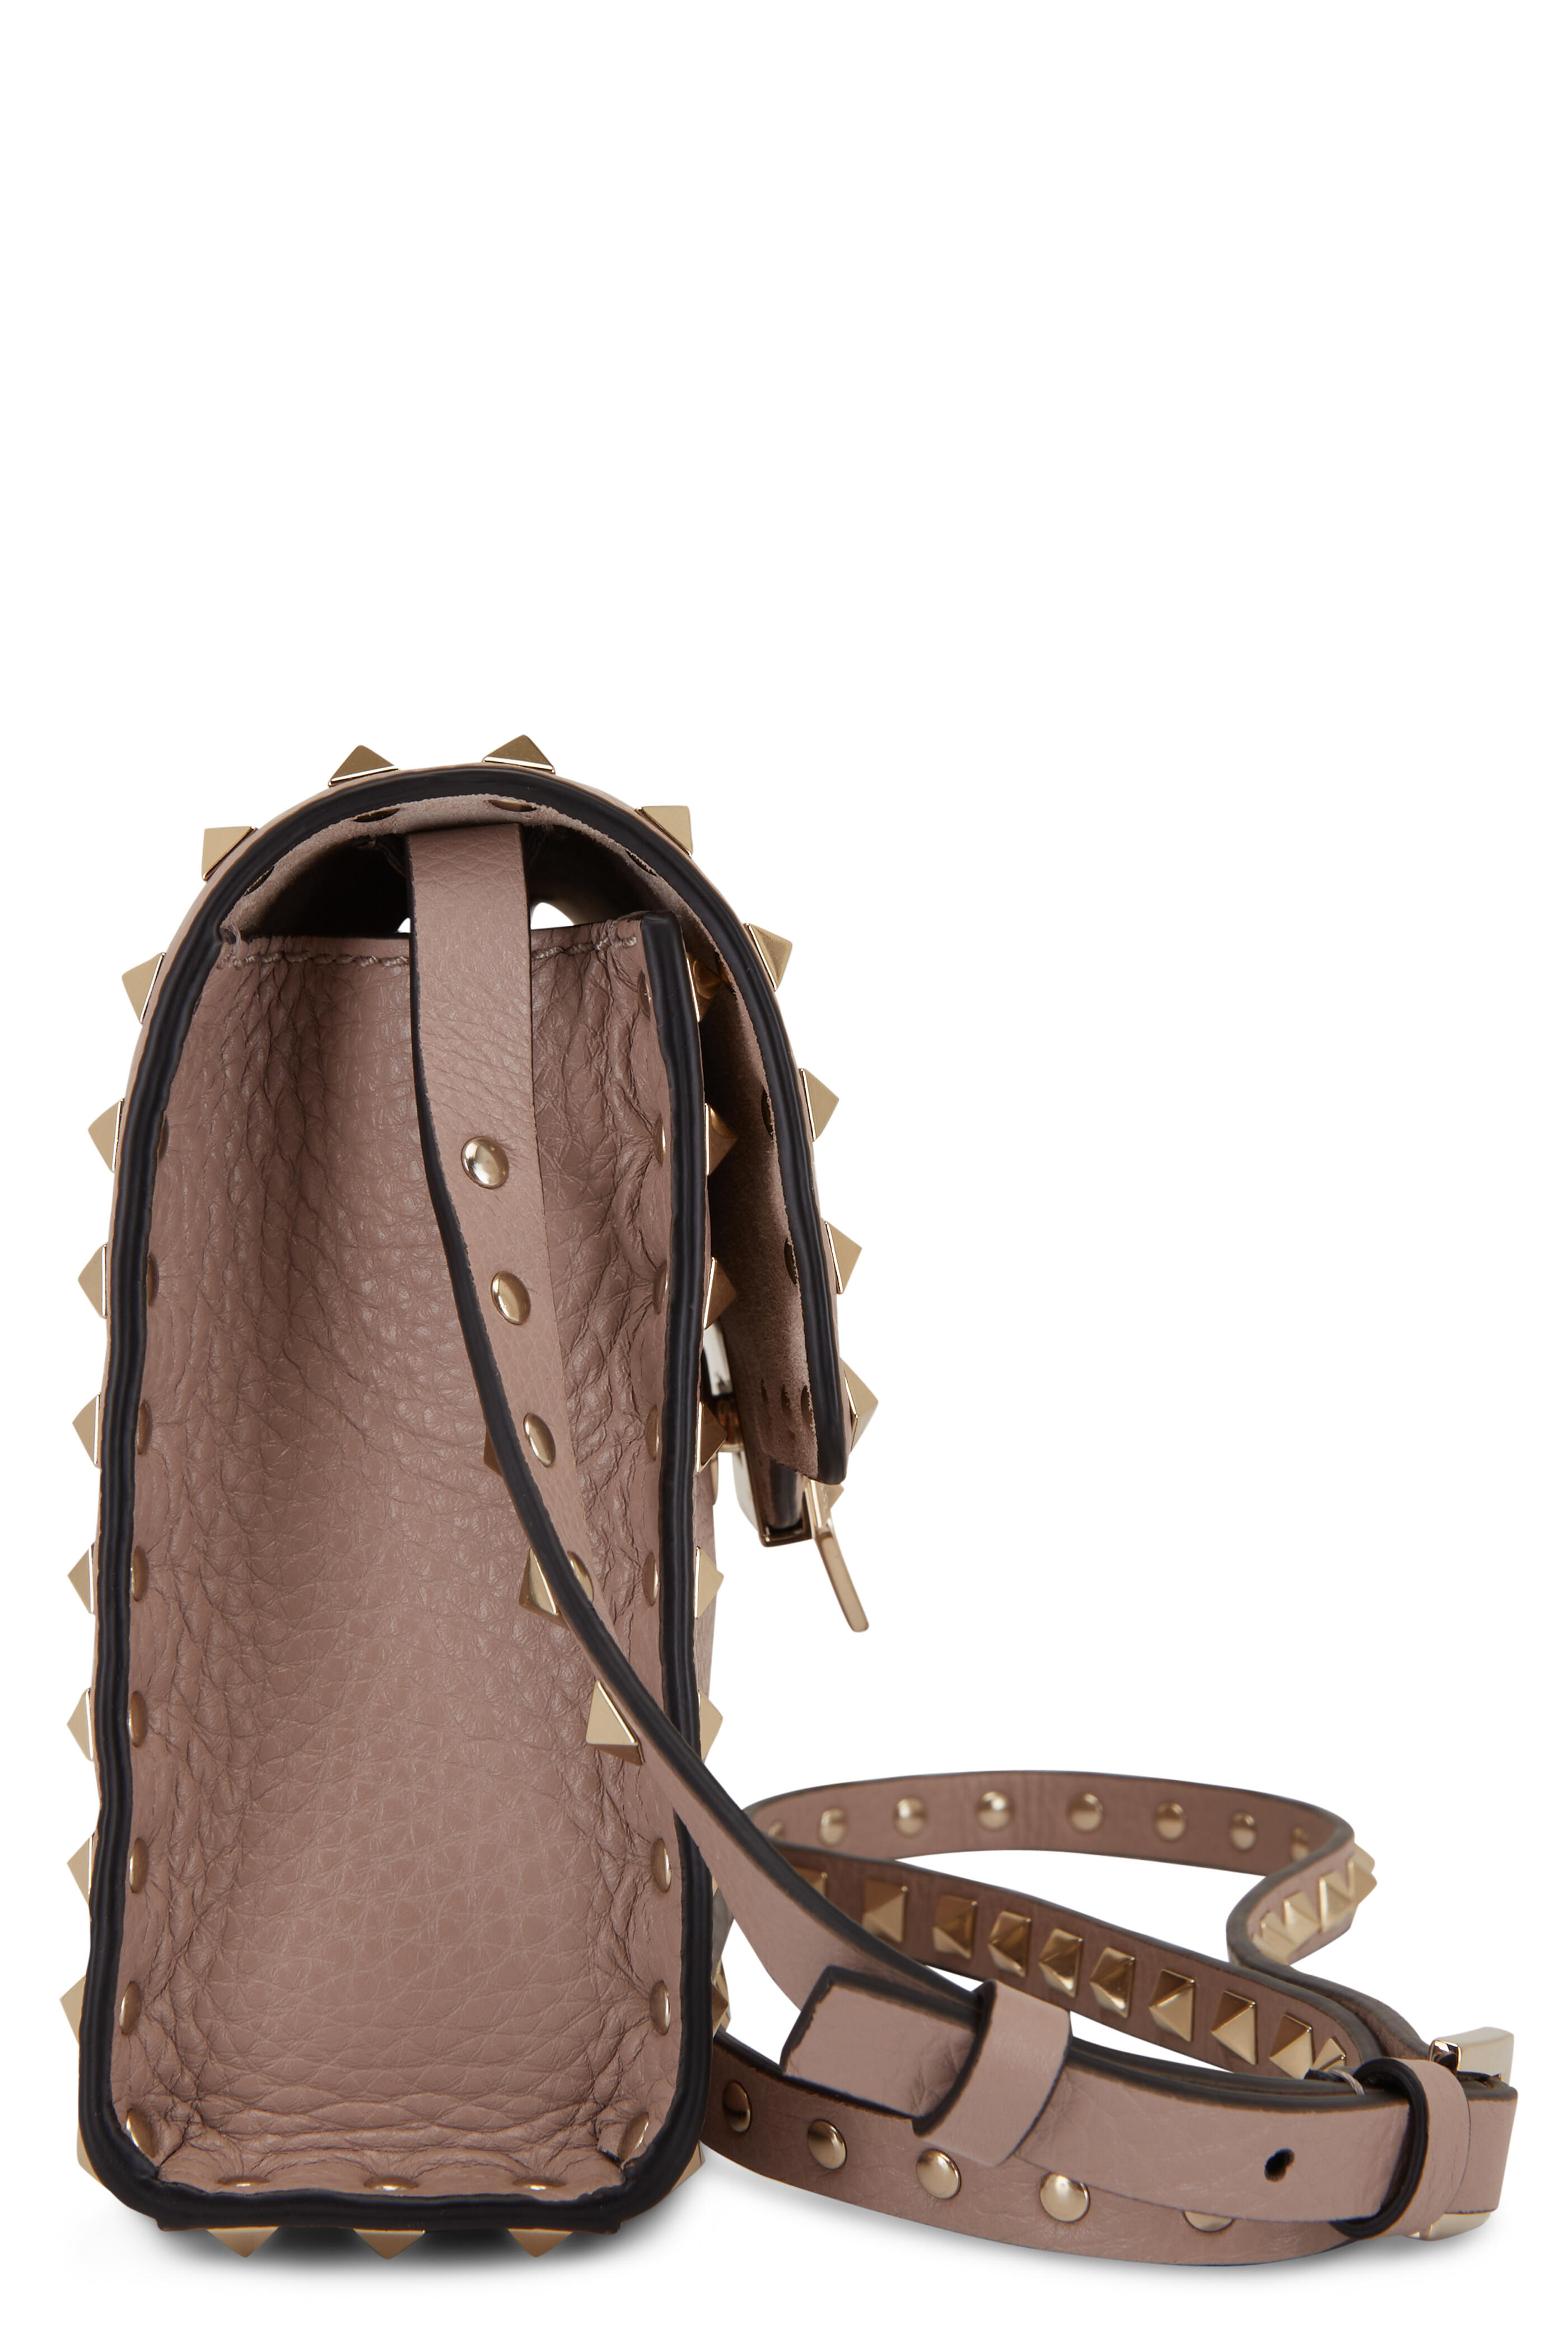 Valentino Garavani Women's Poudre Rockstud Small Tote Crossbody Bag | by Mitchell Stores